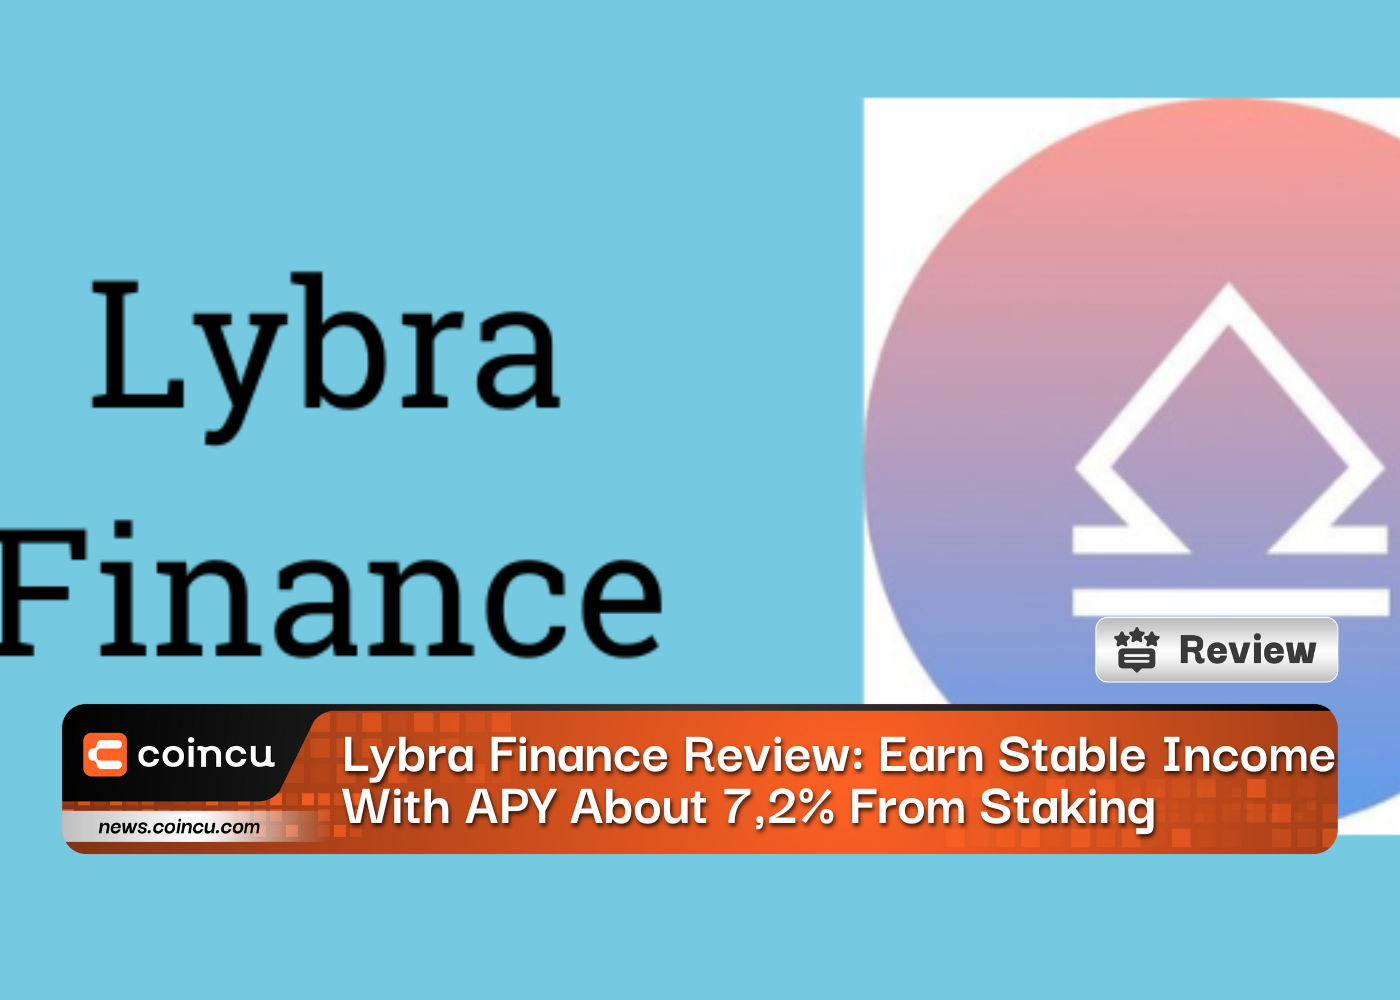 Lybra Finance レビュー: APY でステーキングから約 7,2% の安定した収入を得る